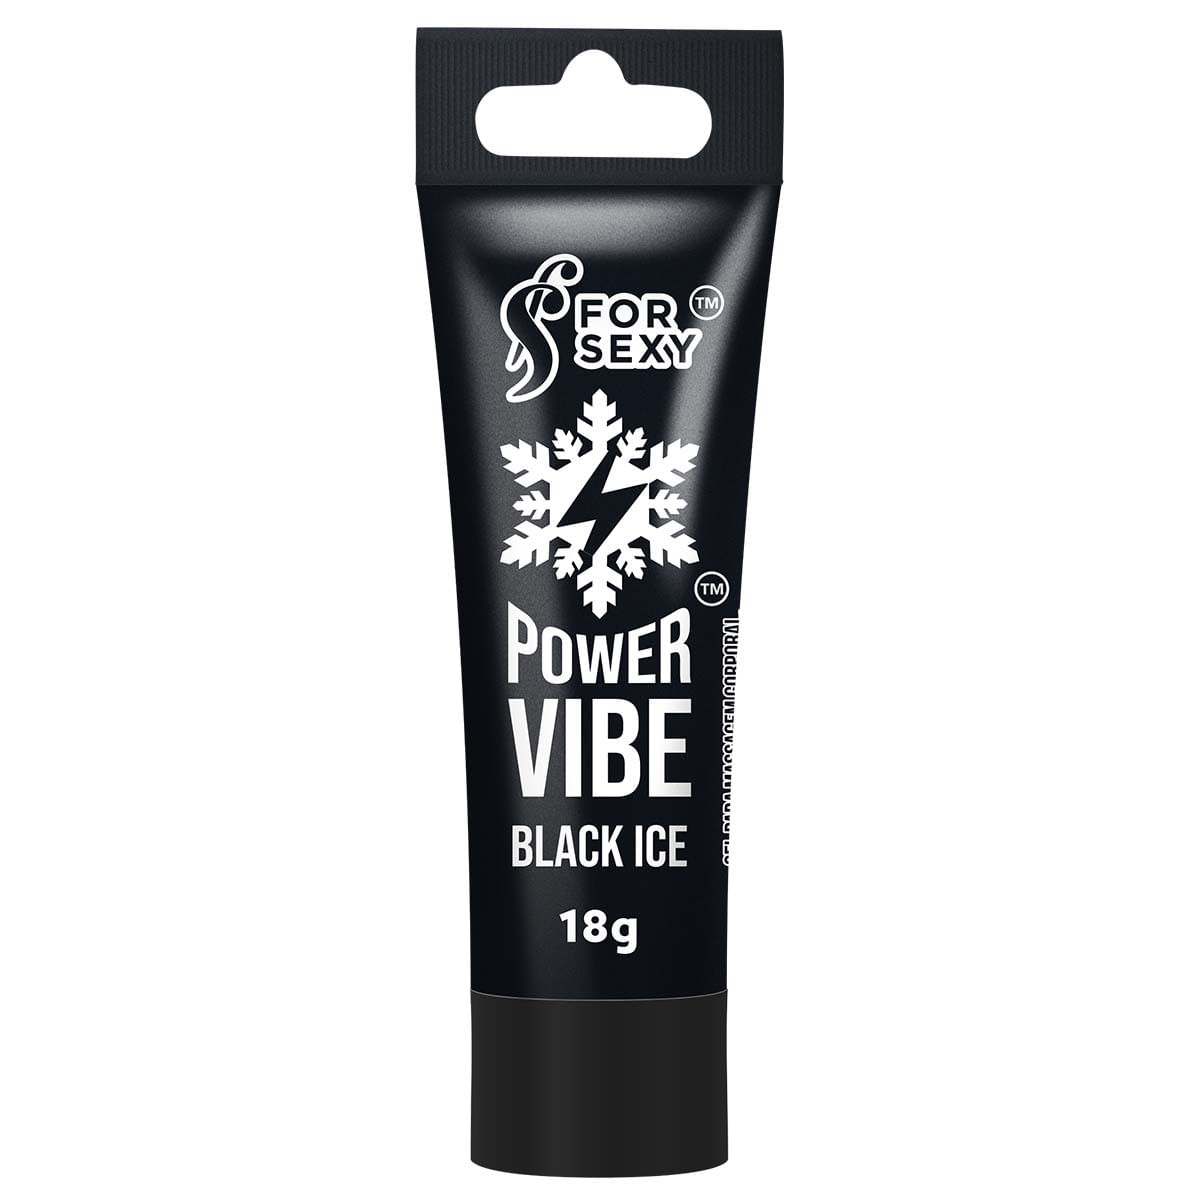 Power Vibe Black Ice Vibrador Líquido 18g For Sexy